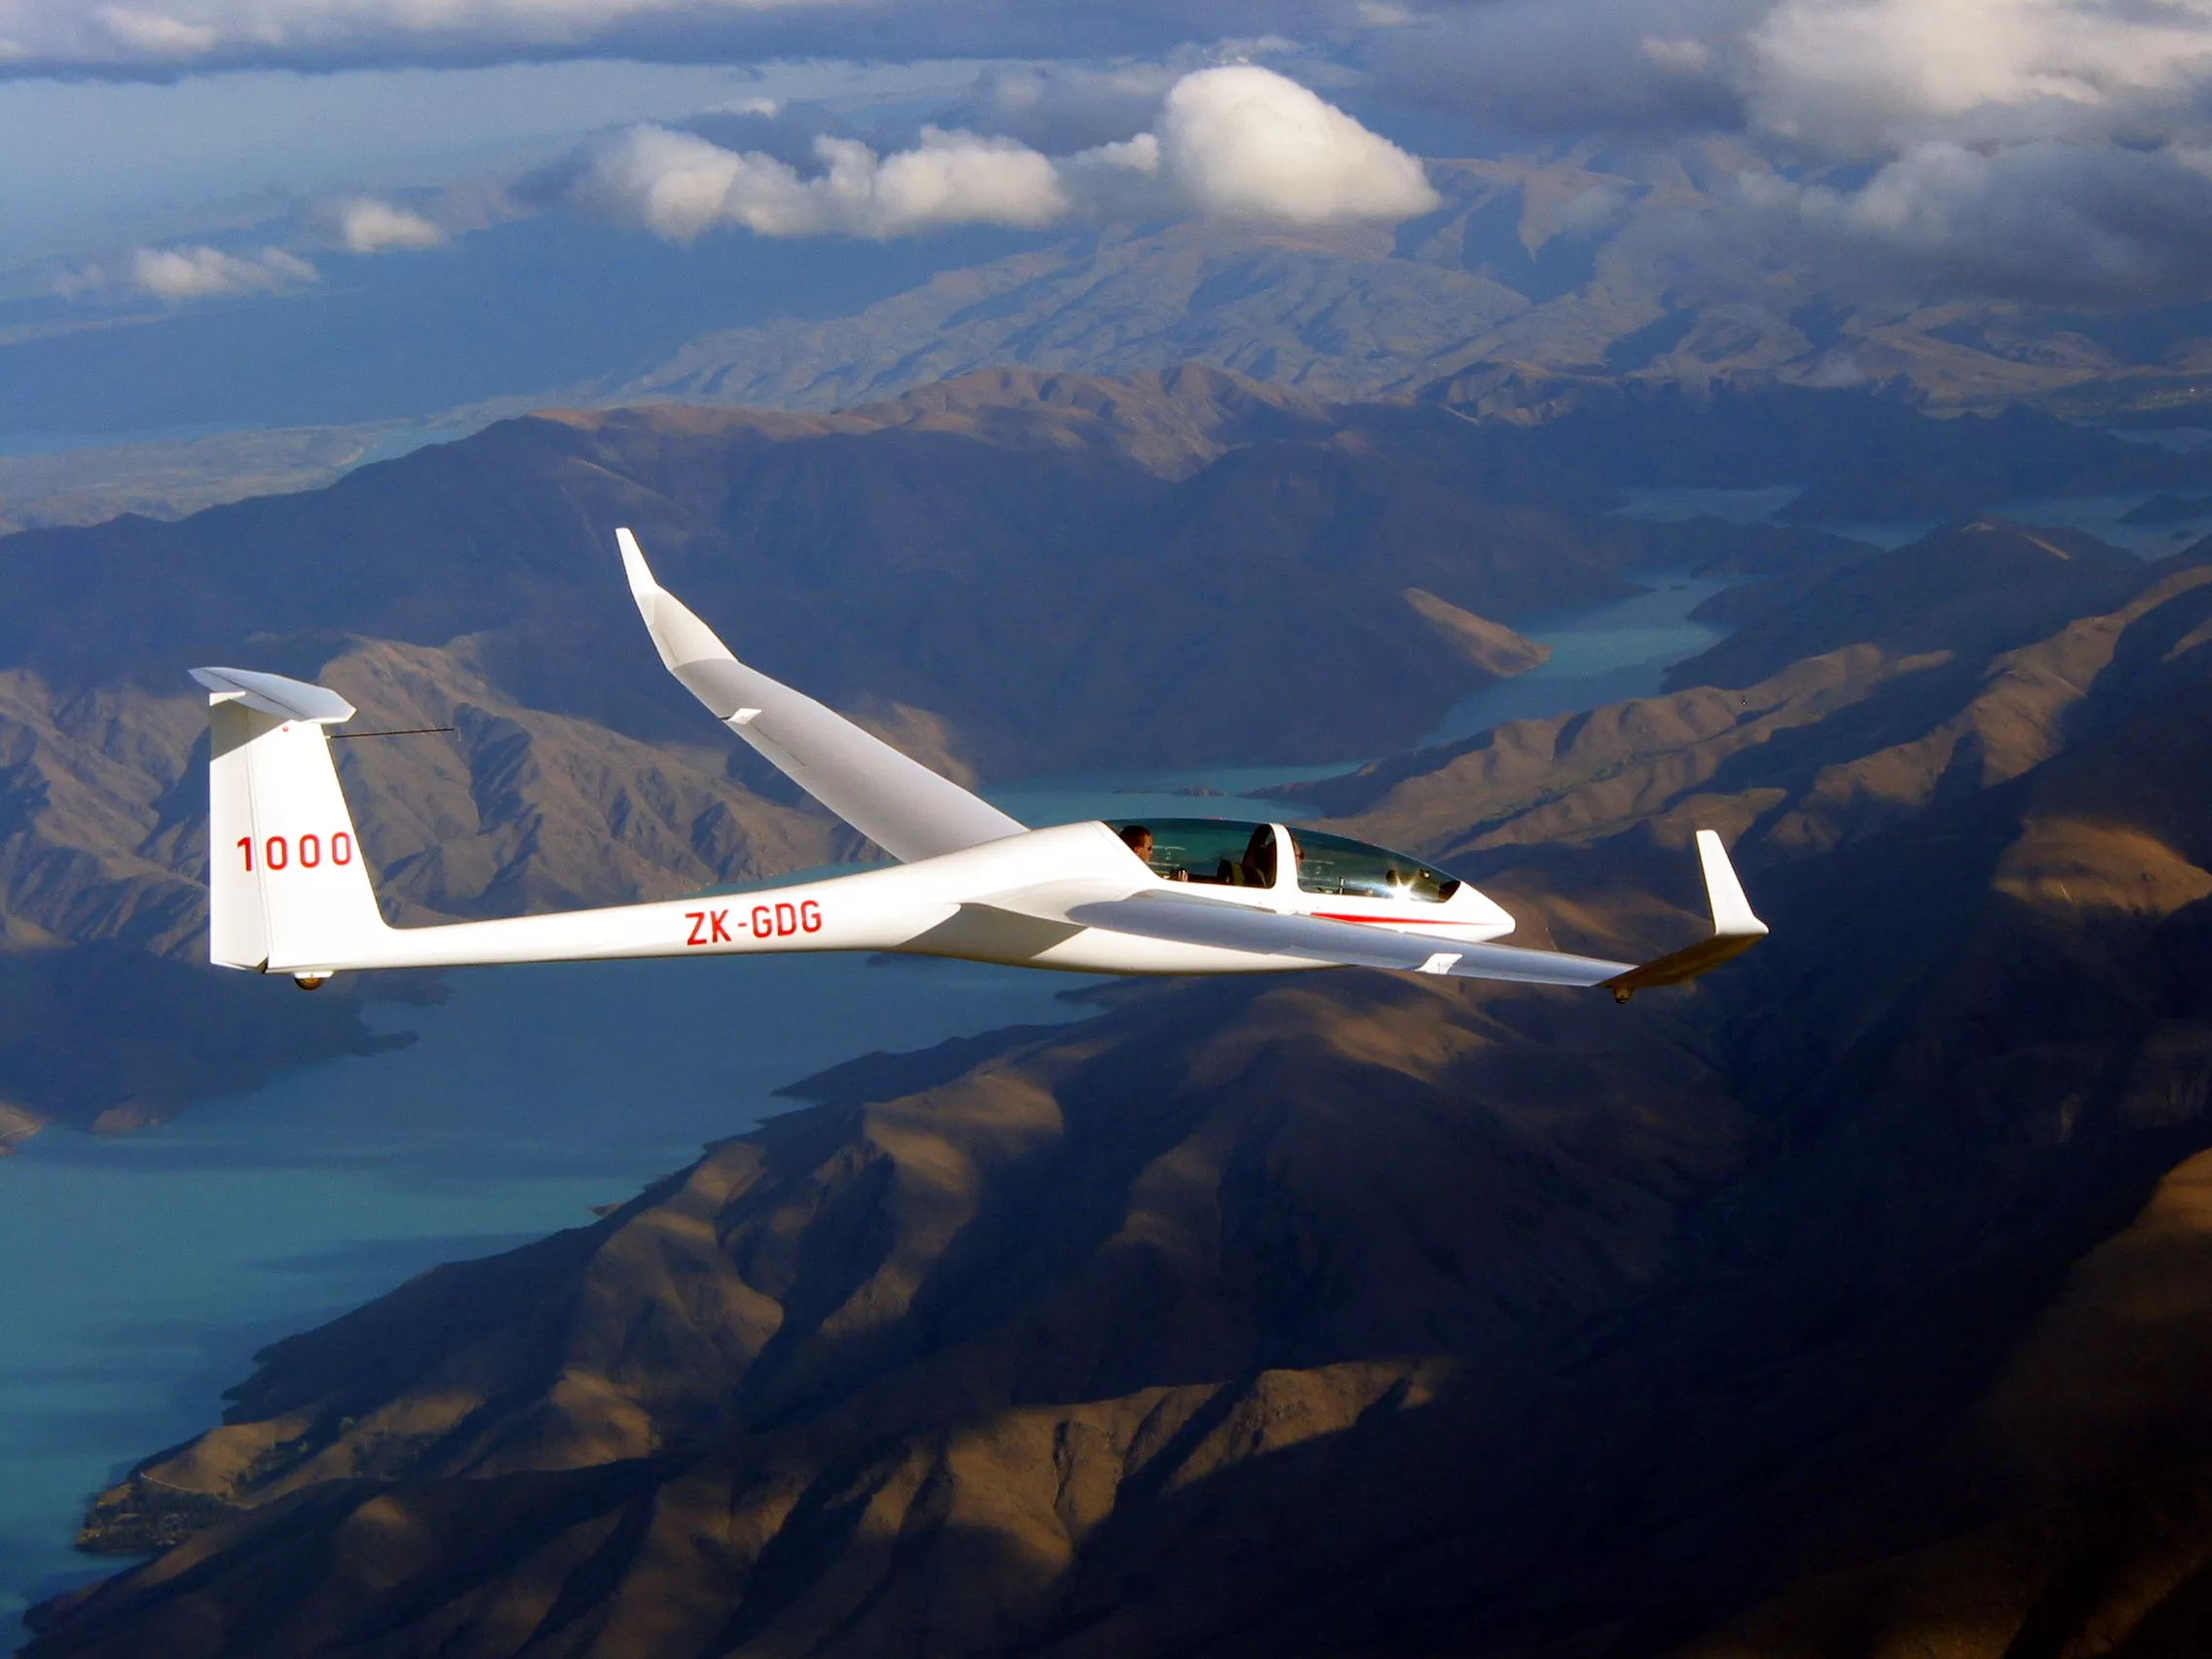 Glide Omarama in New Zealand, Australia and Oceania | Sailplane - Rated 4.4